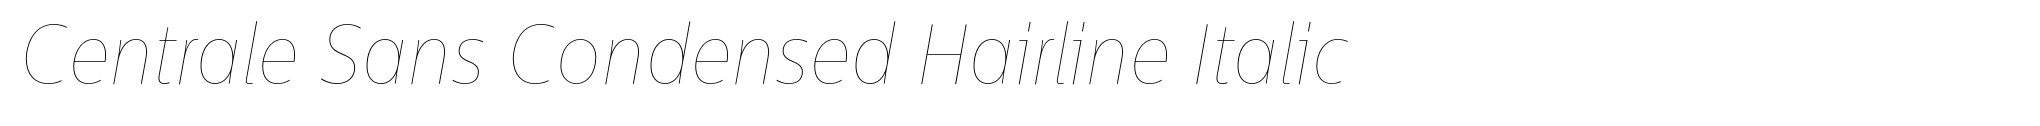 Centrale Sans Condensed Hairline Italic image